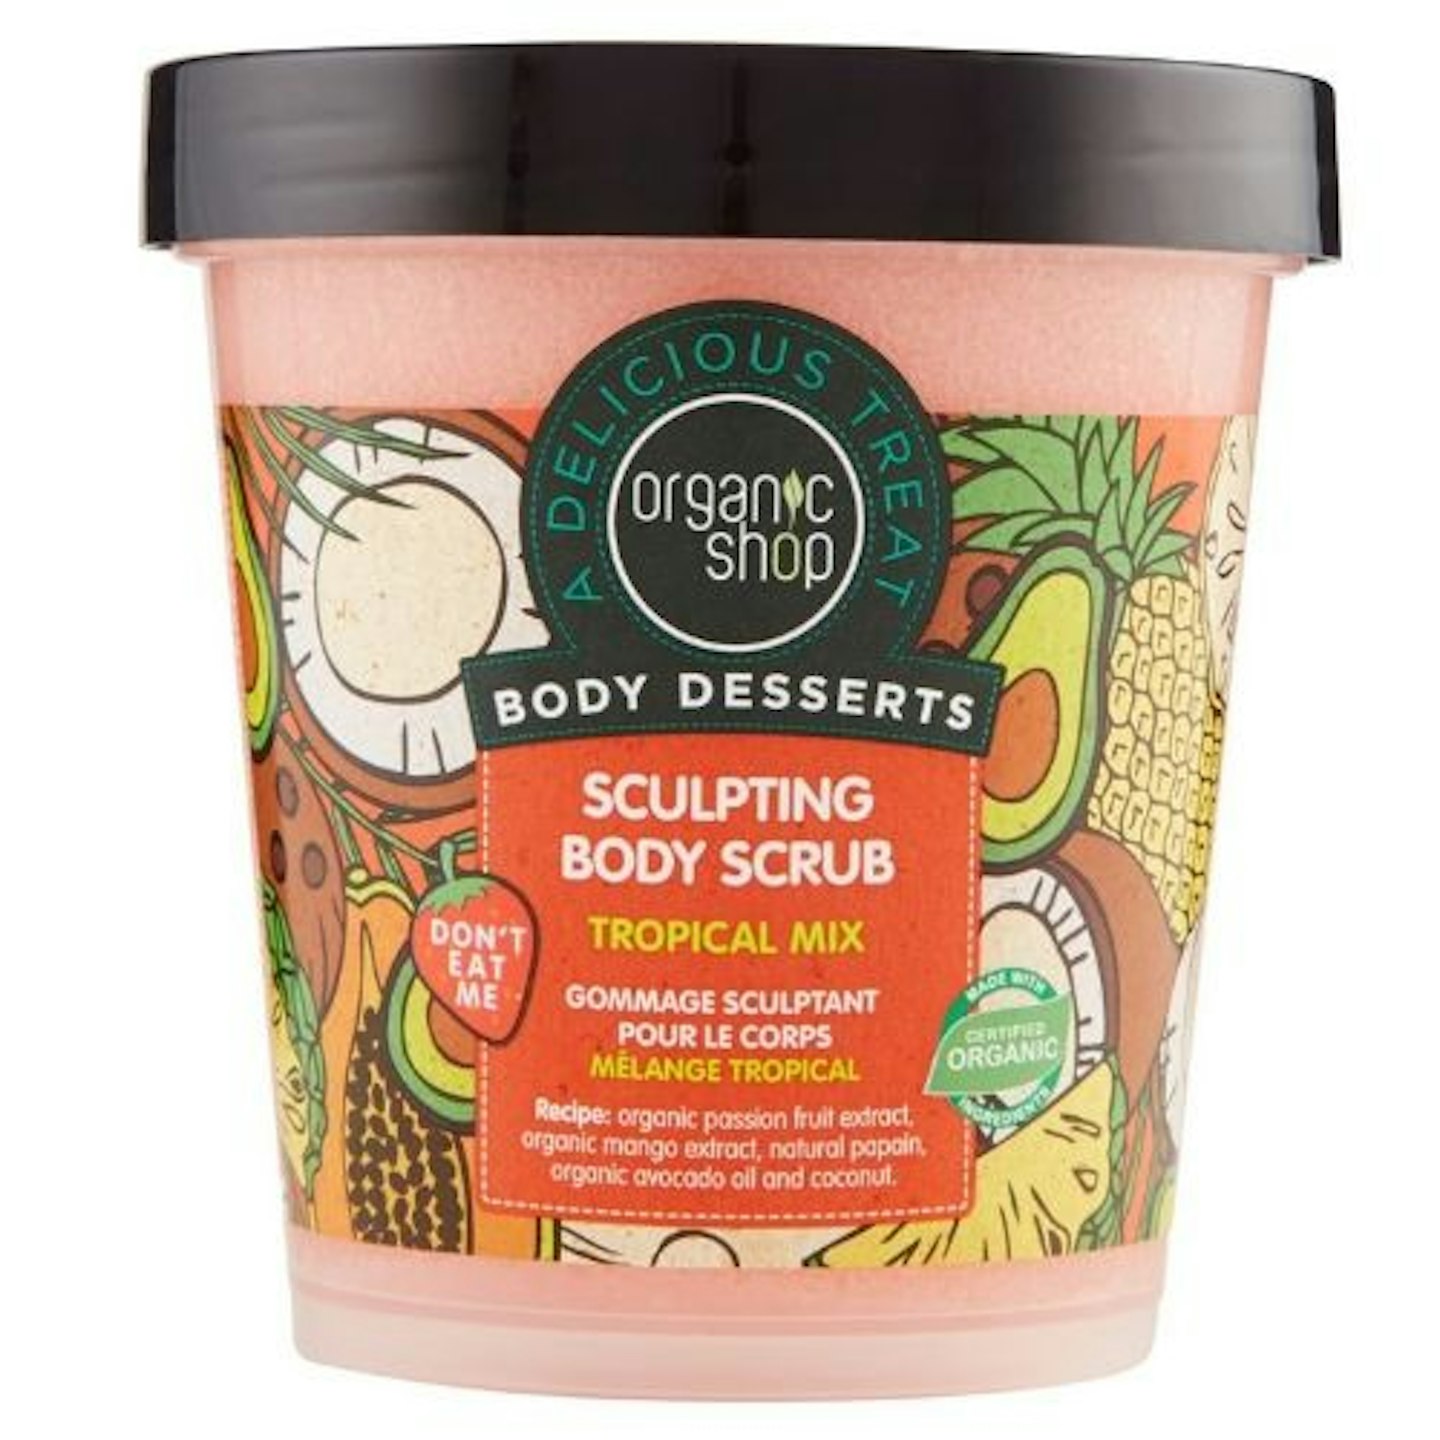 Organic Shop Body Desserts Tropical Mix Sculpting Body Scrub